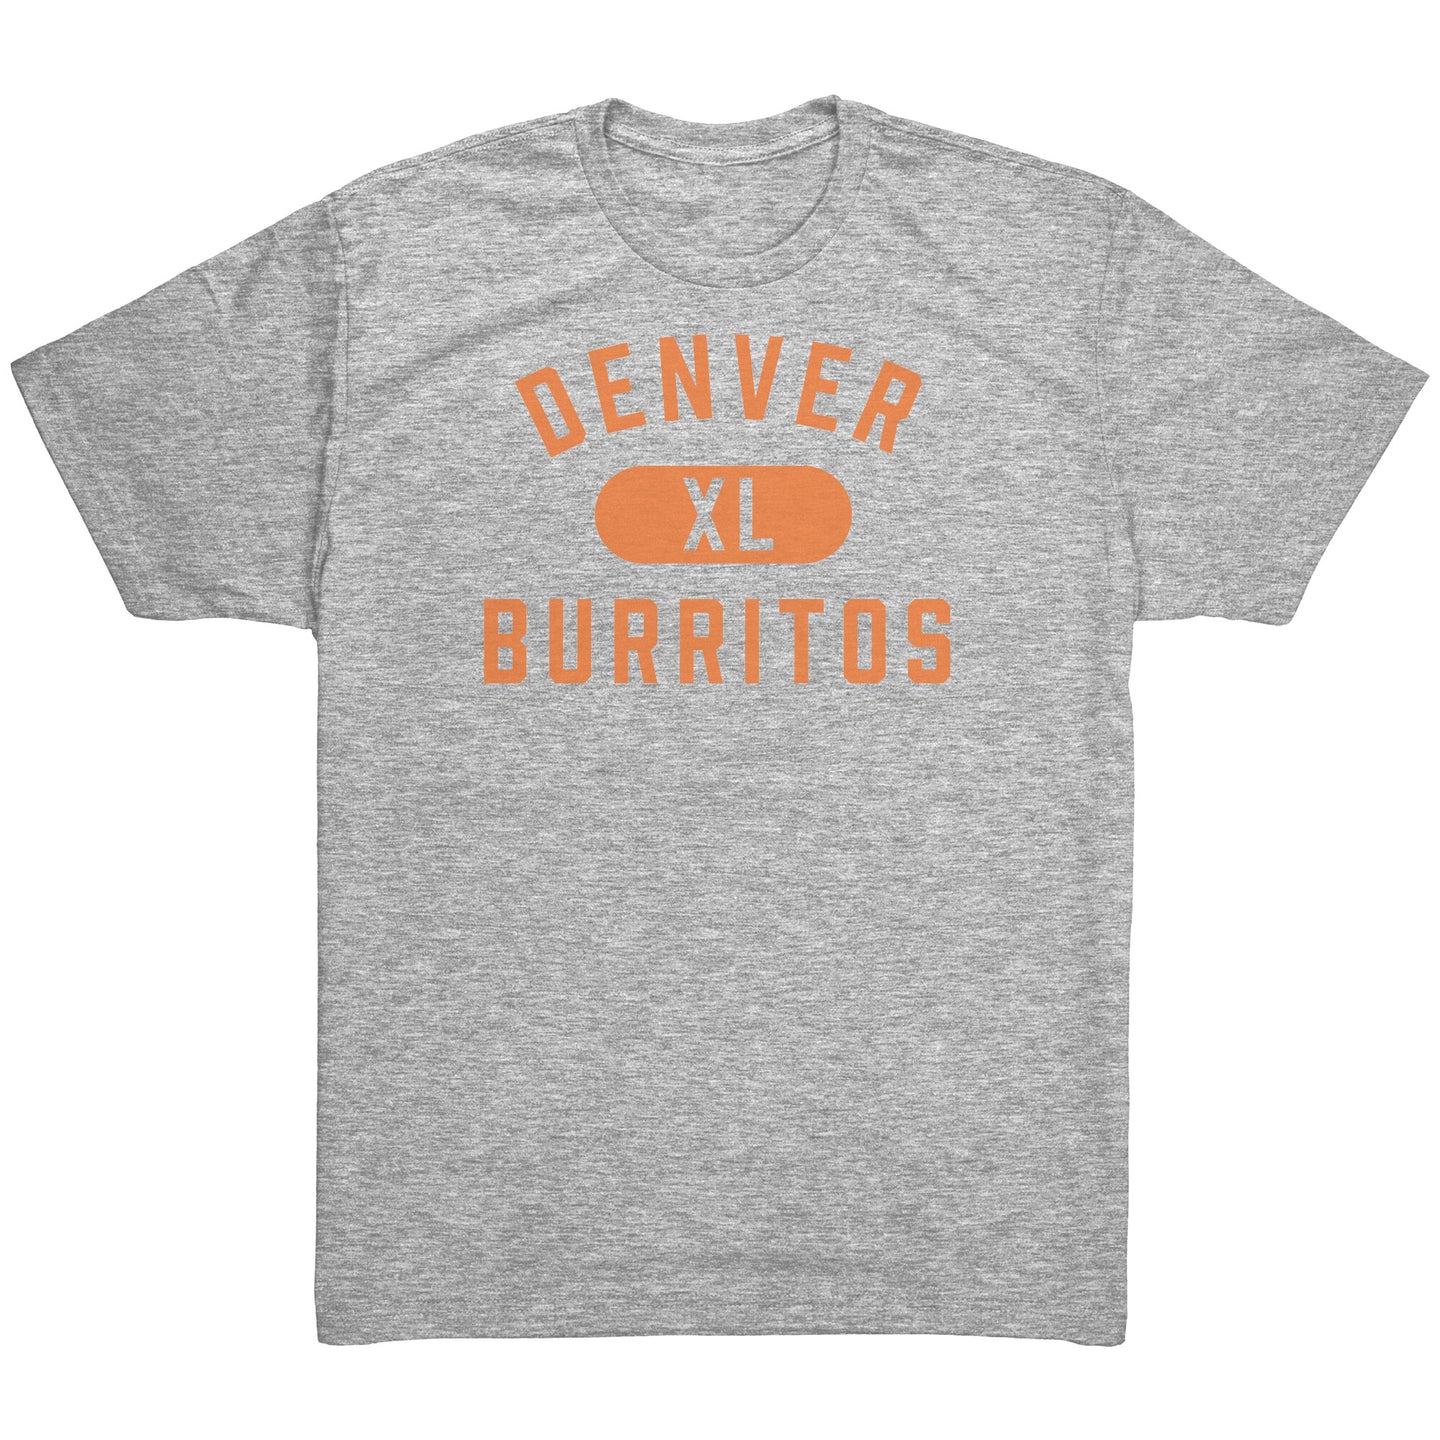 BURRITOS! t-shirt